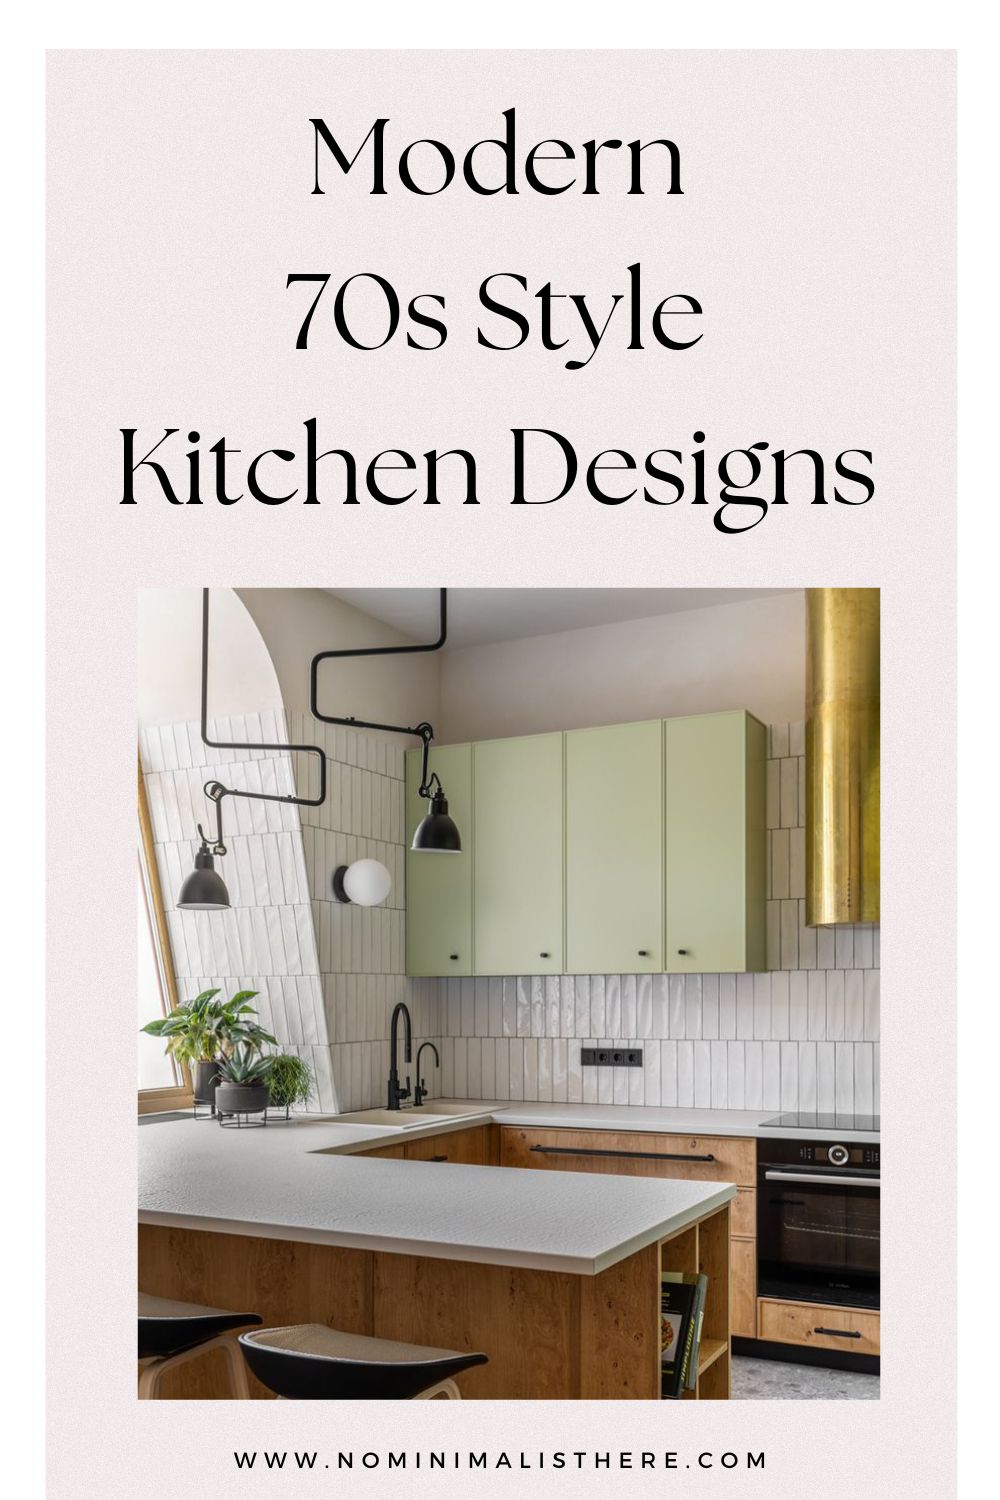 pinterest image about Modern 70s Style Kitchen Designs